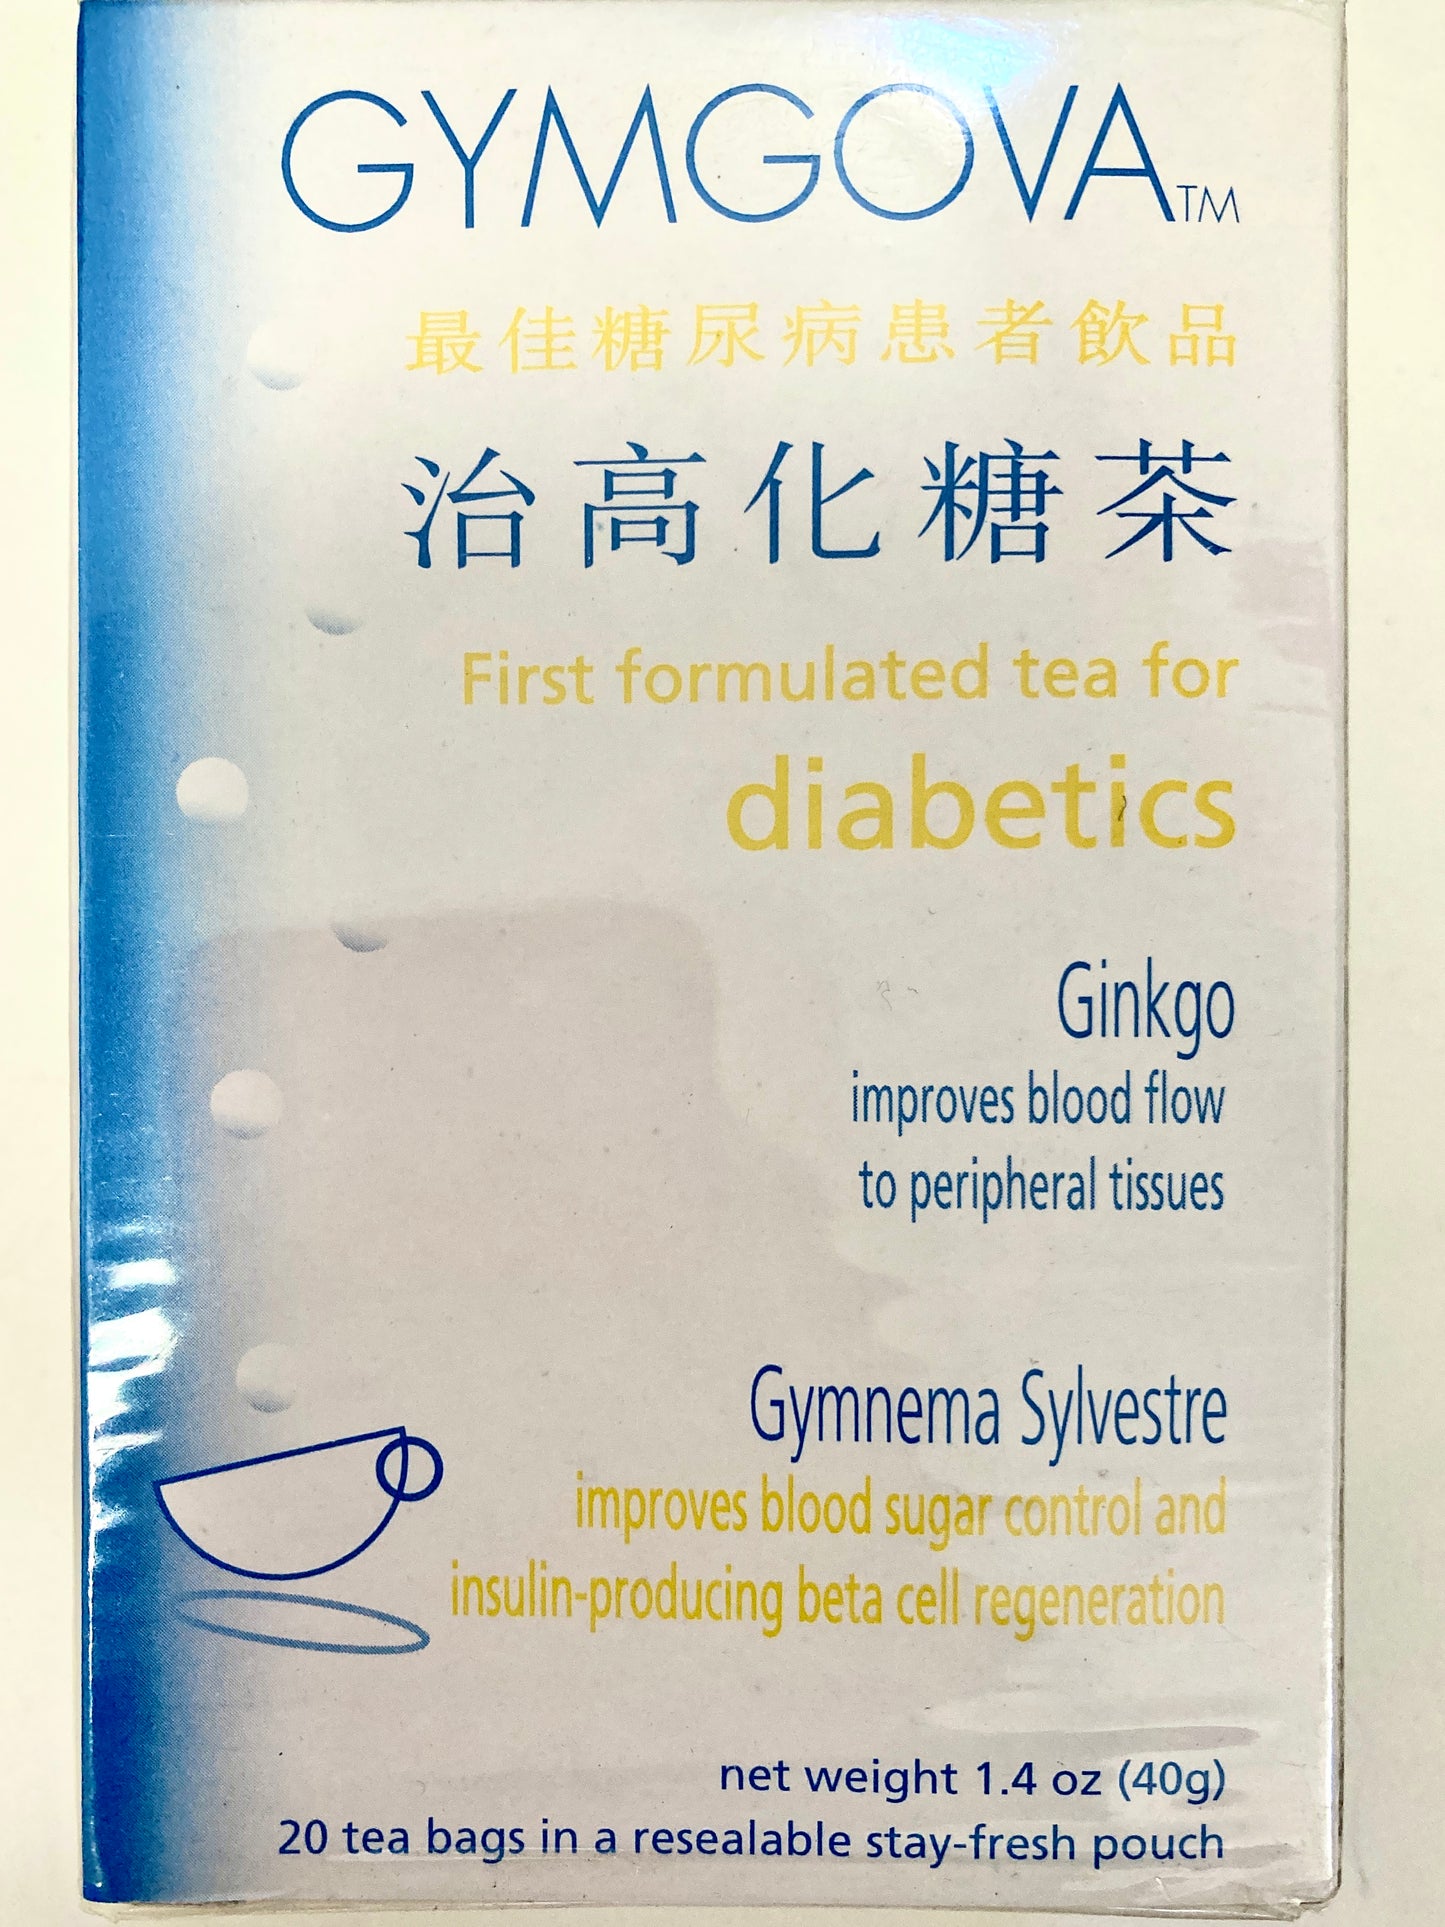 Gymgova Tea - For Diabetics